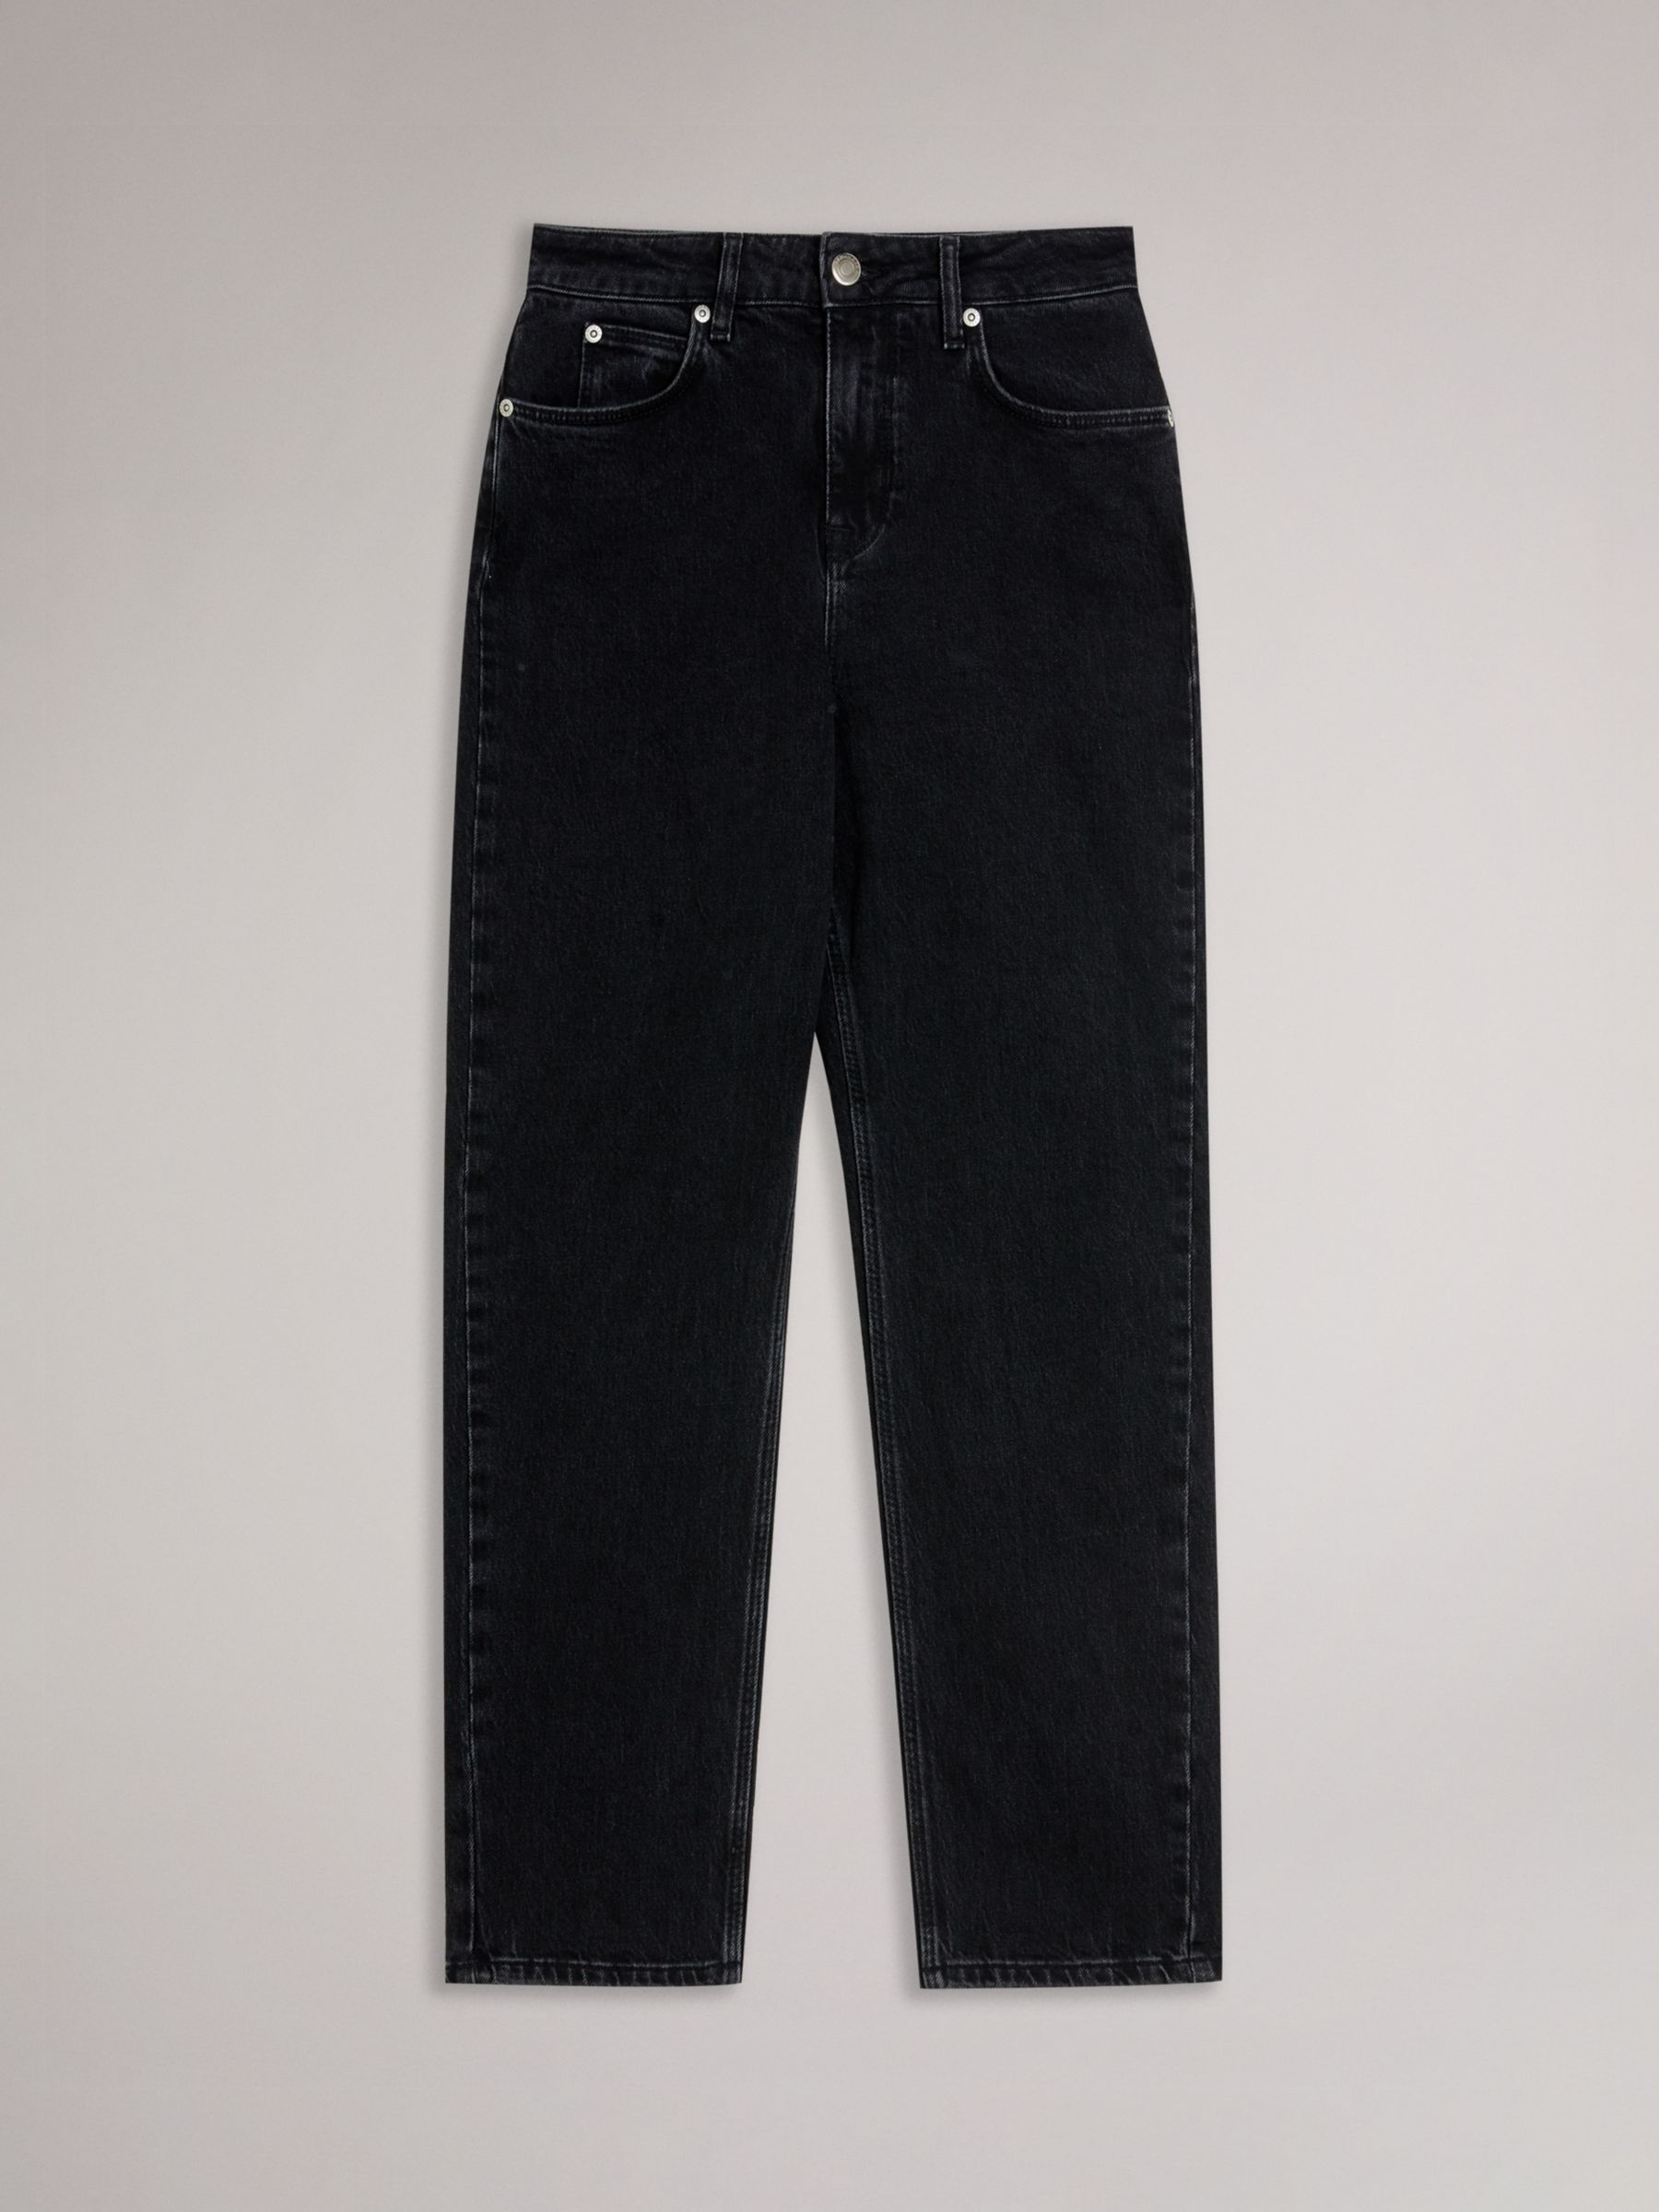 Ted Baker Dahla Straight Cut Jeans, Black, 26R